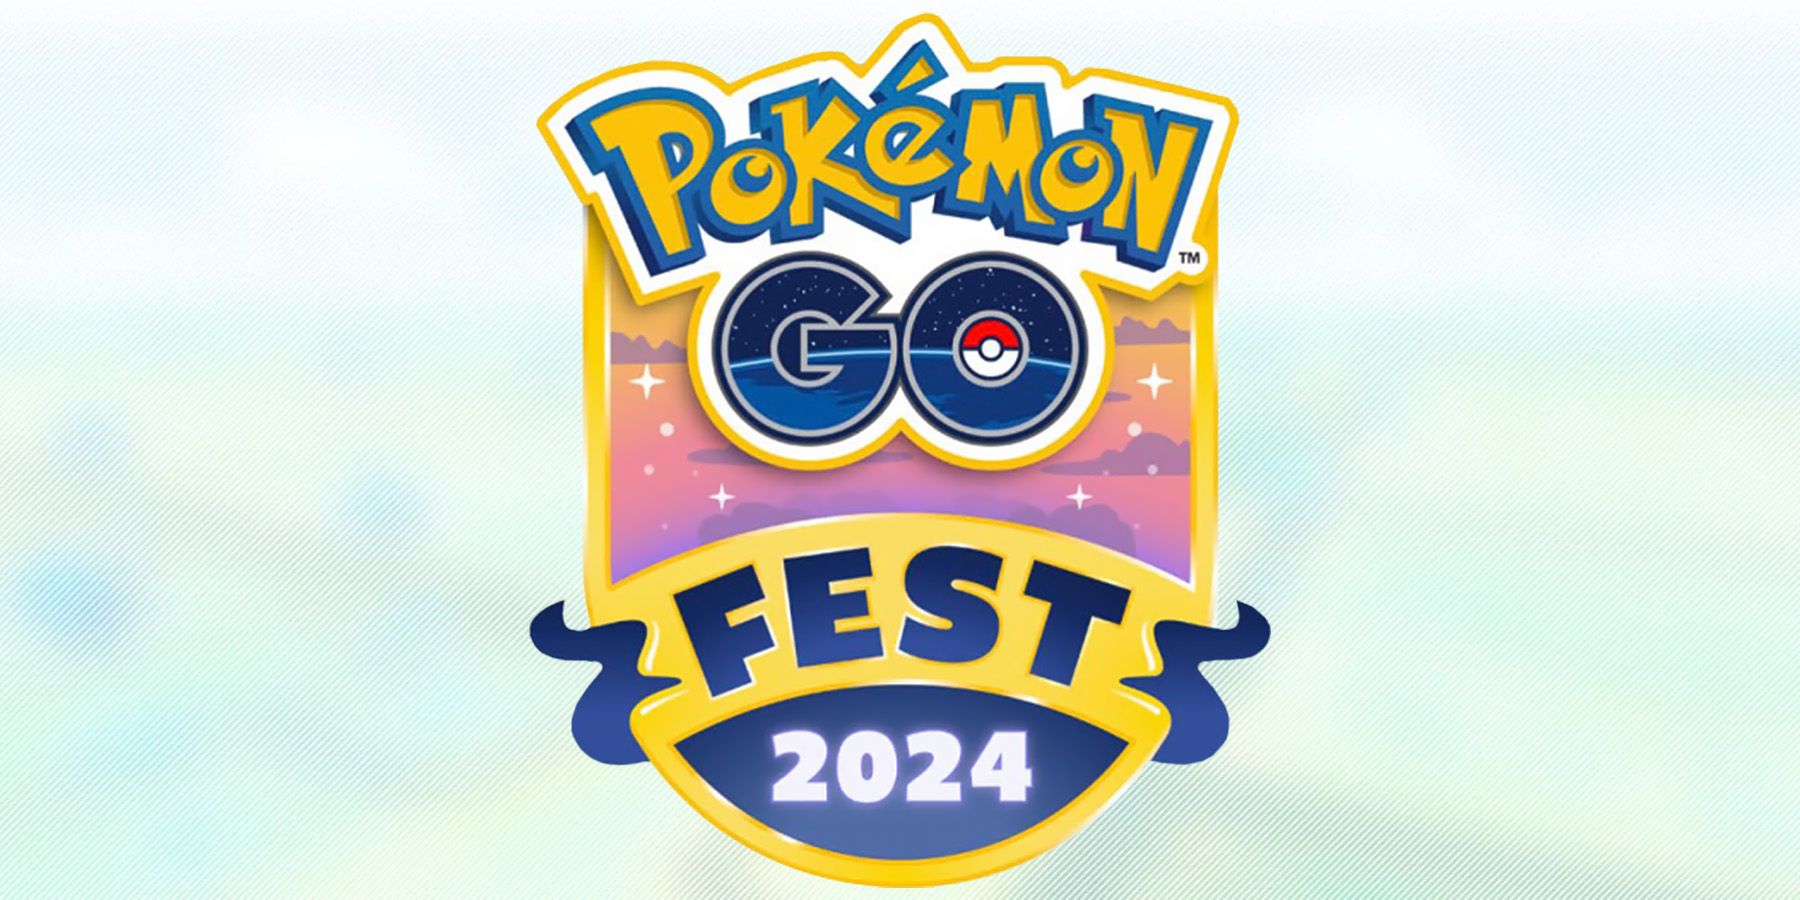 Pokemon GO Fest 2024 logo emblem on opaque game map background